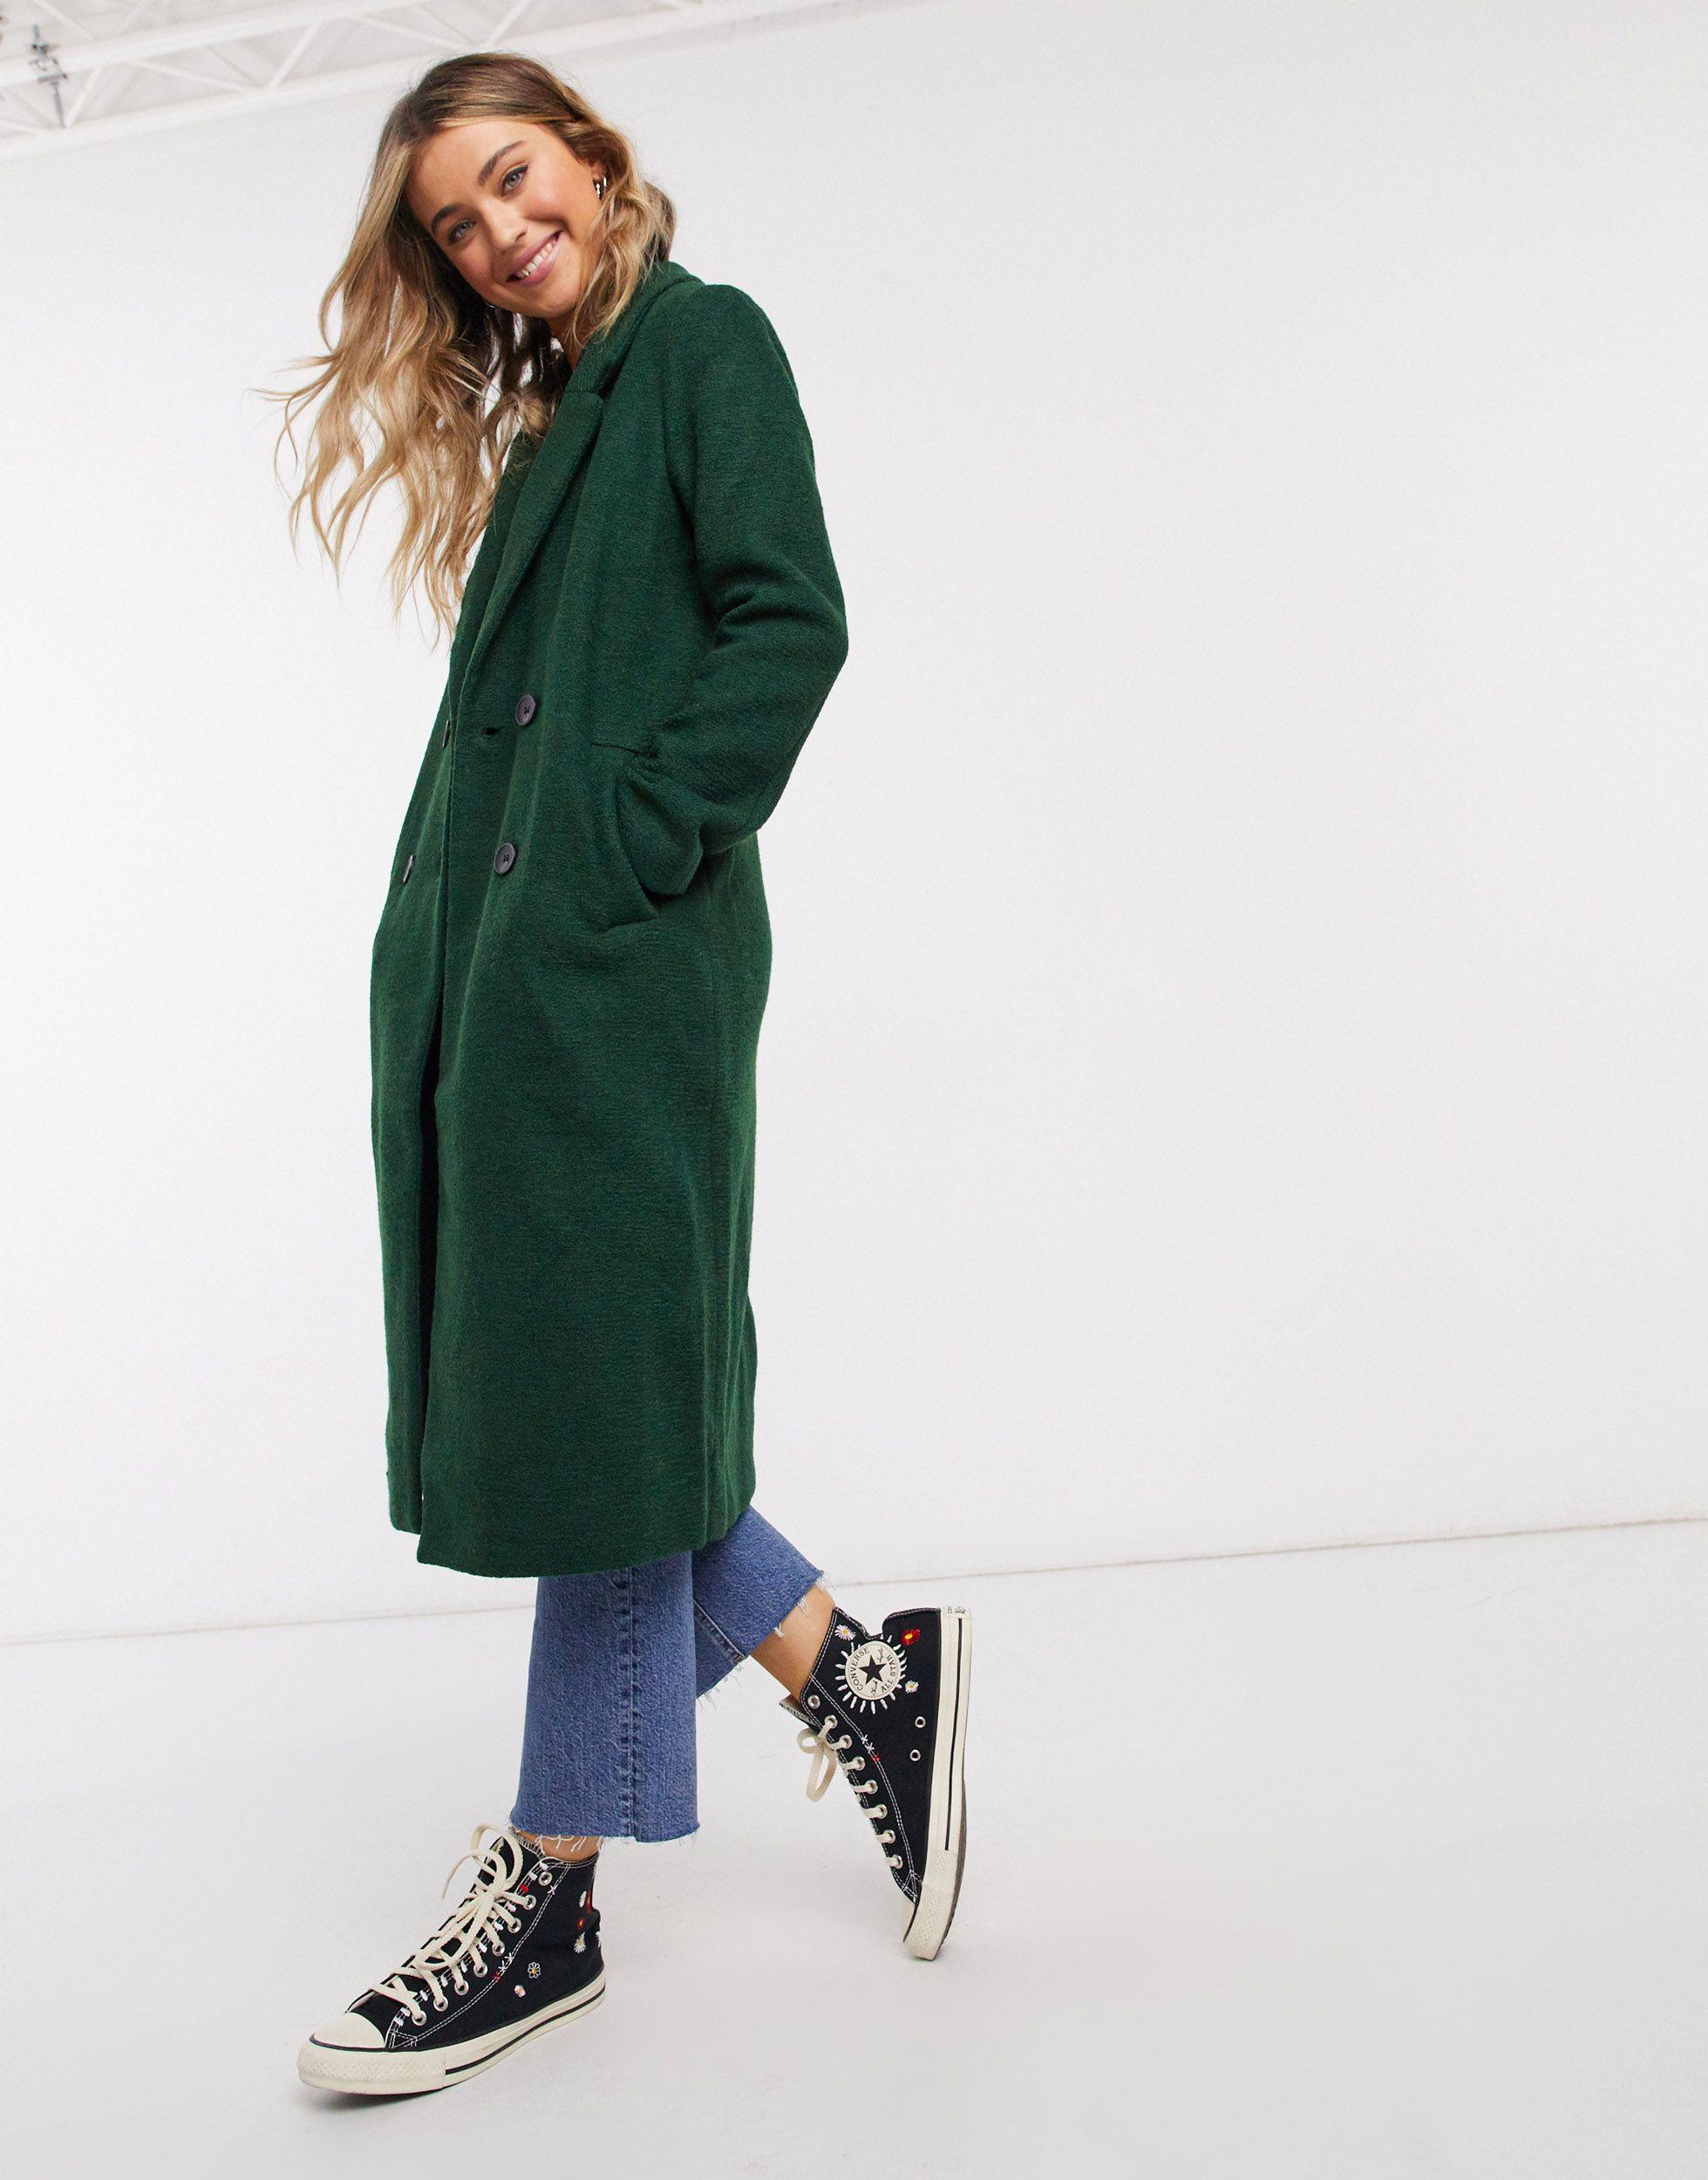 Monki Coats for Women Online Sale up 69% off Lyst